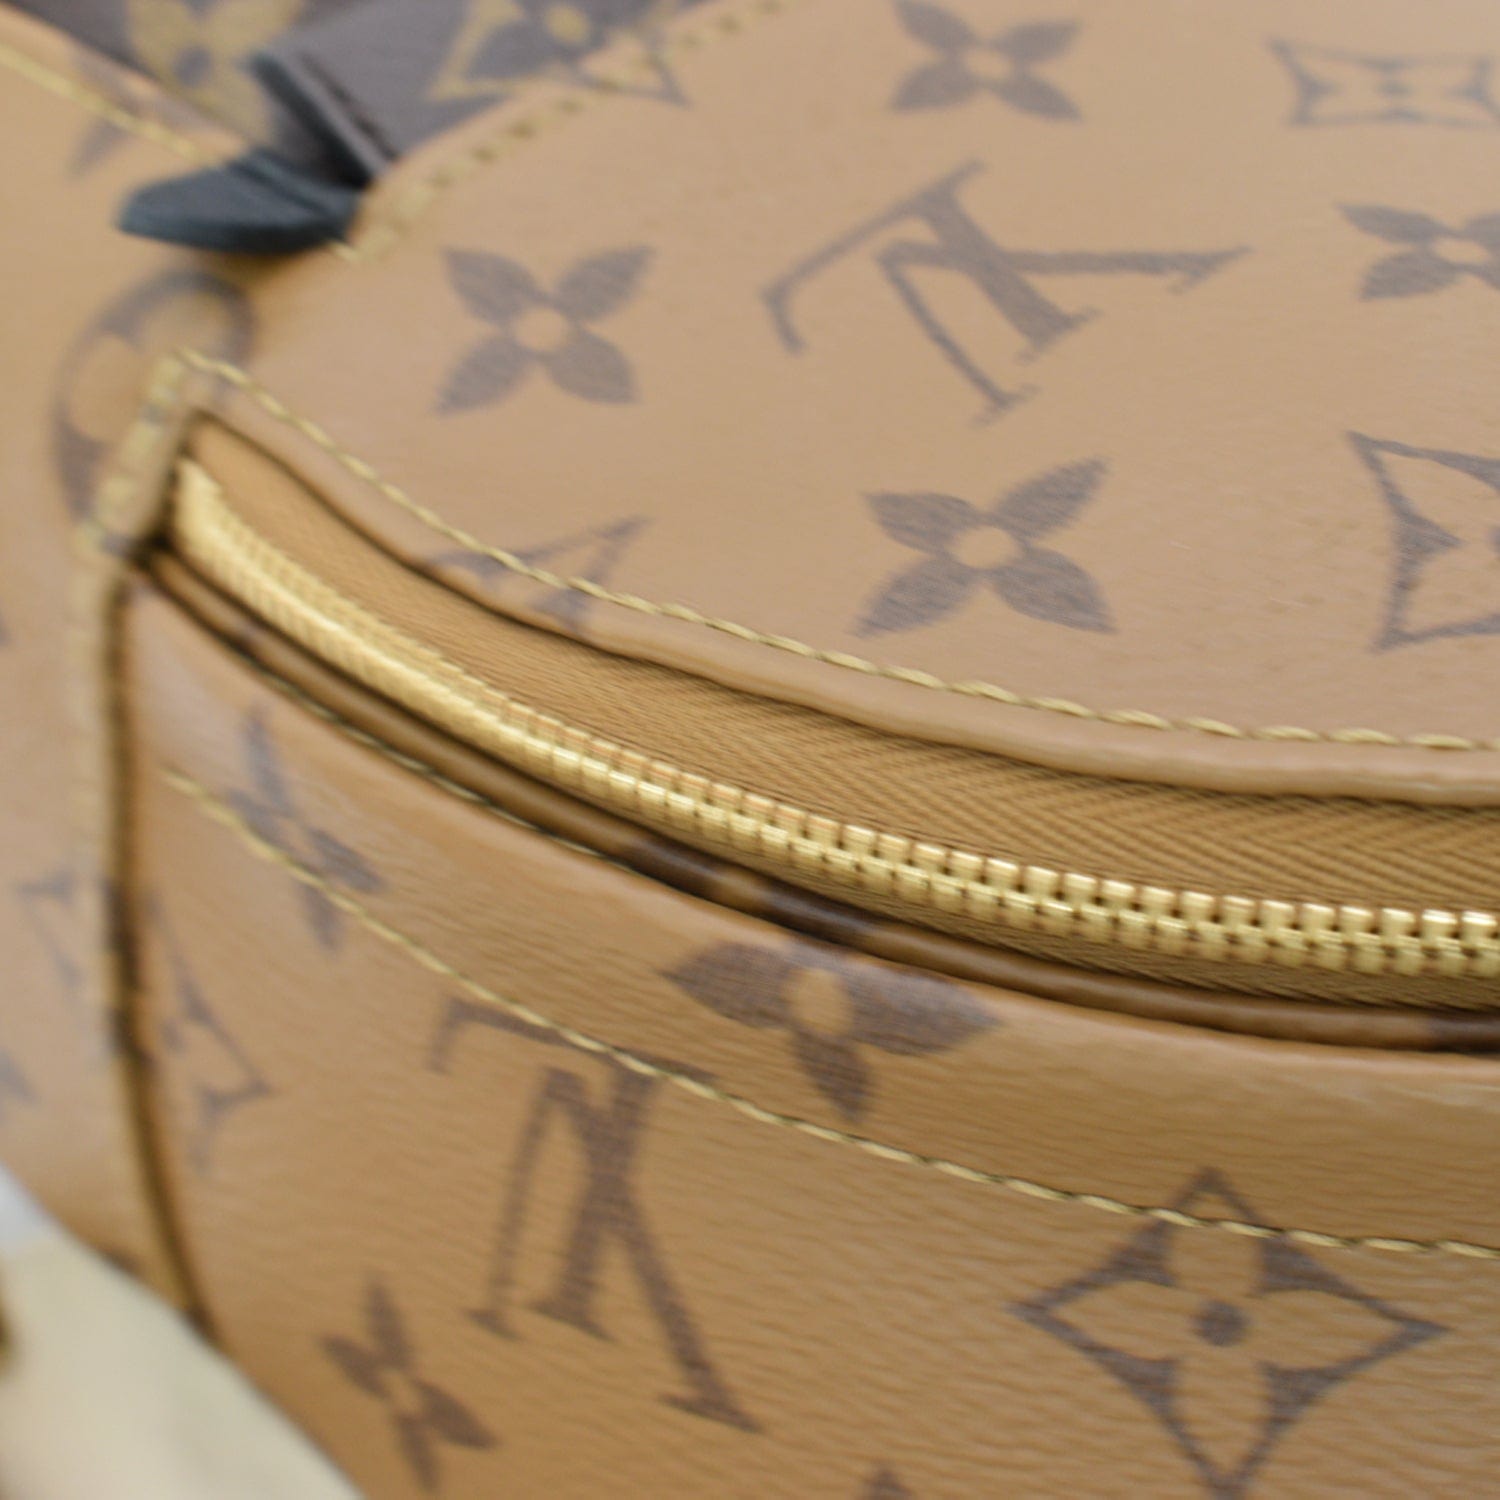 Louis Vuitton, Bags, Louis Vuitton Palm Springs Pm Reverse Monogram  Backpack